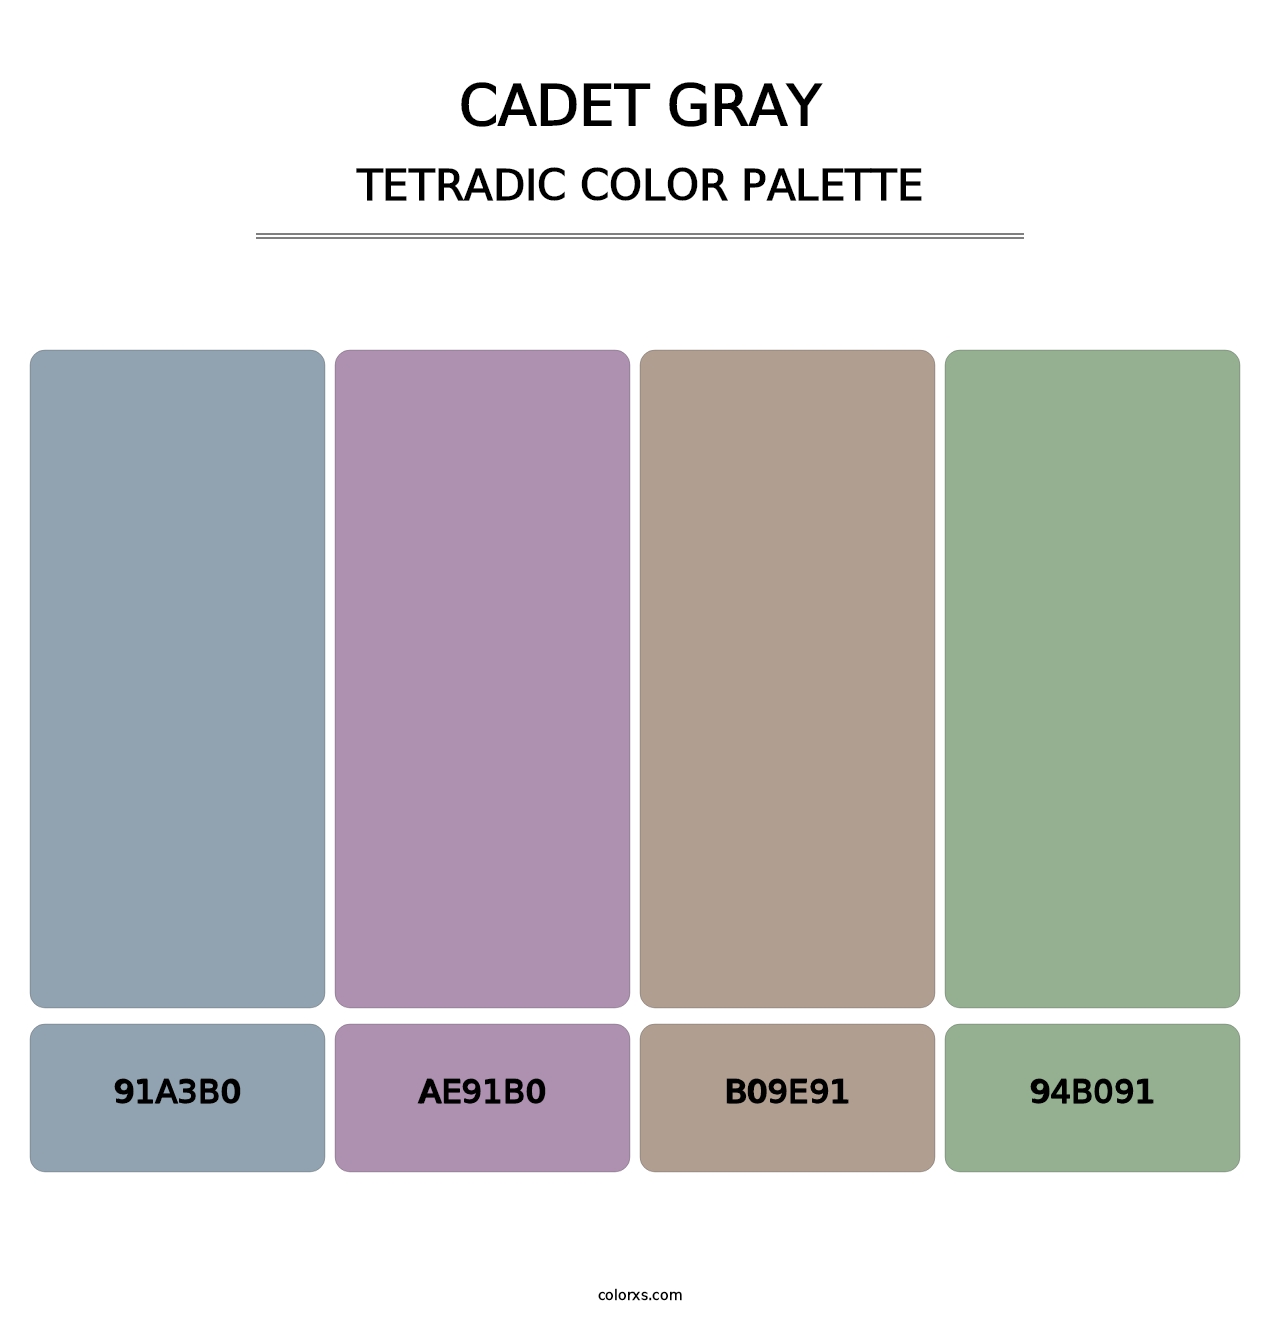 Cadet Gray - Tetradic Color Palette